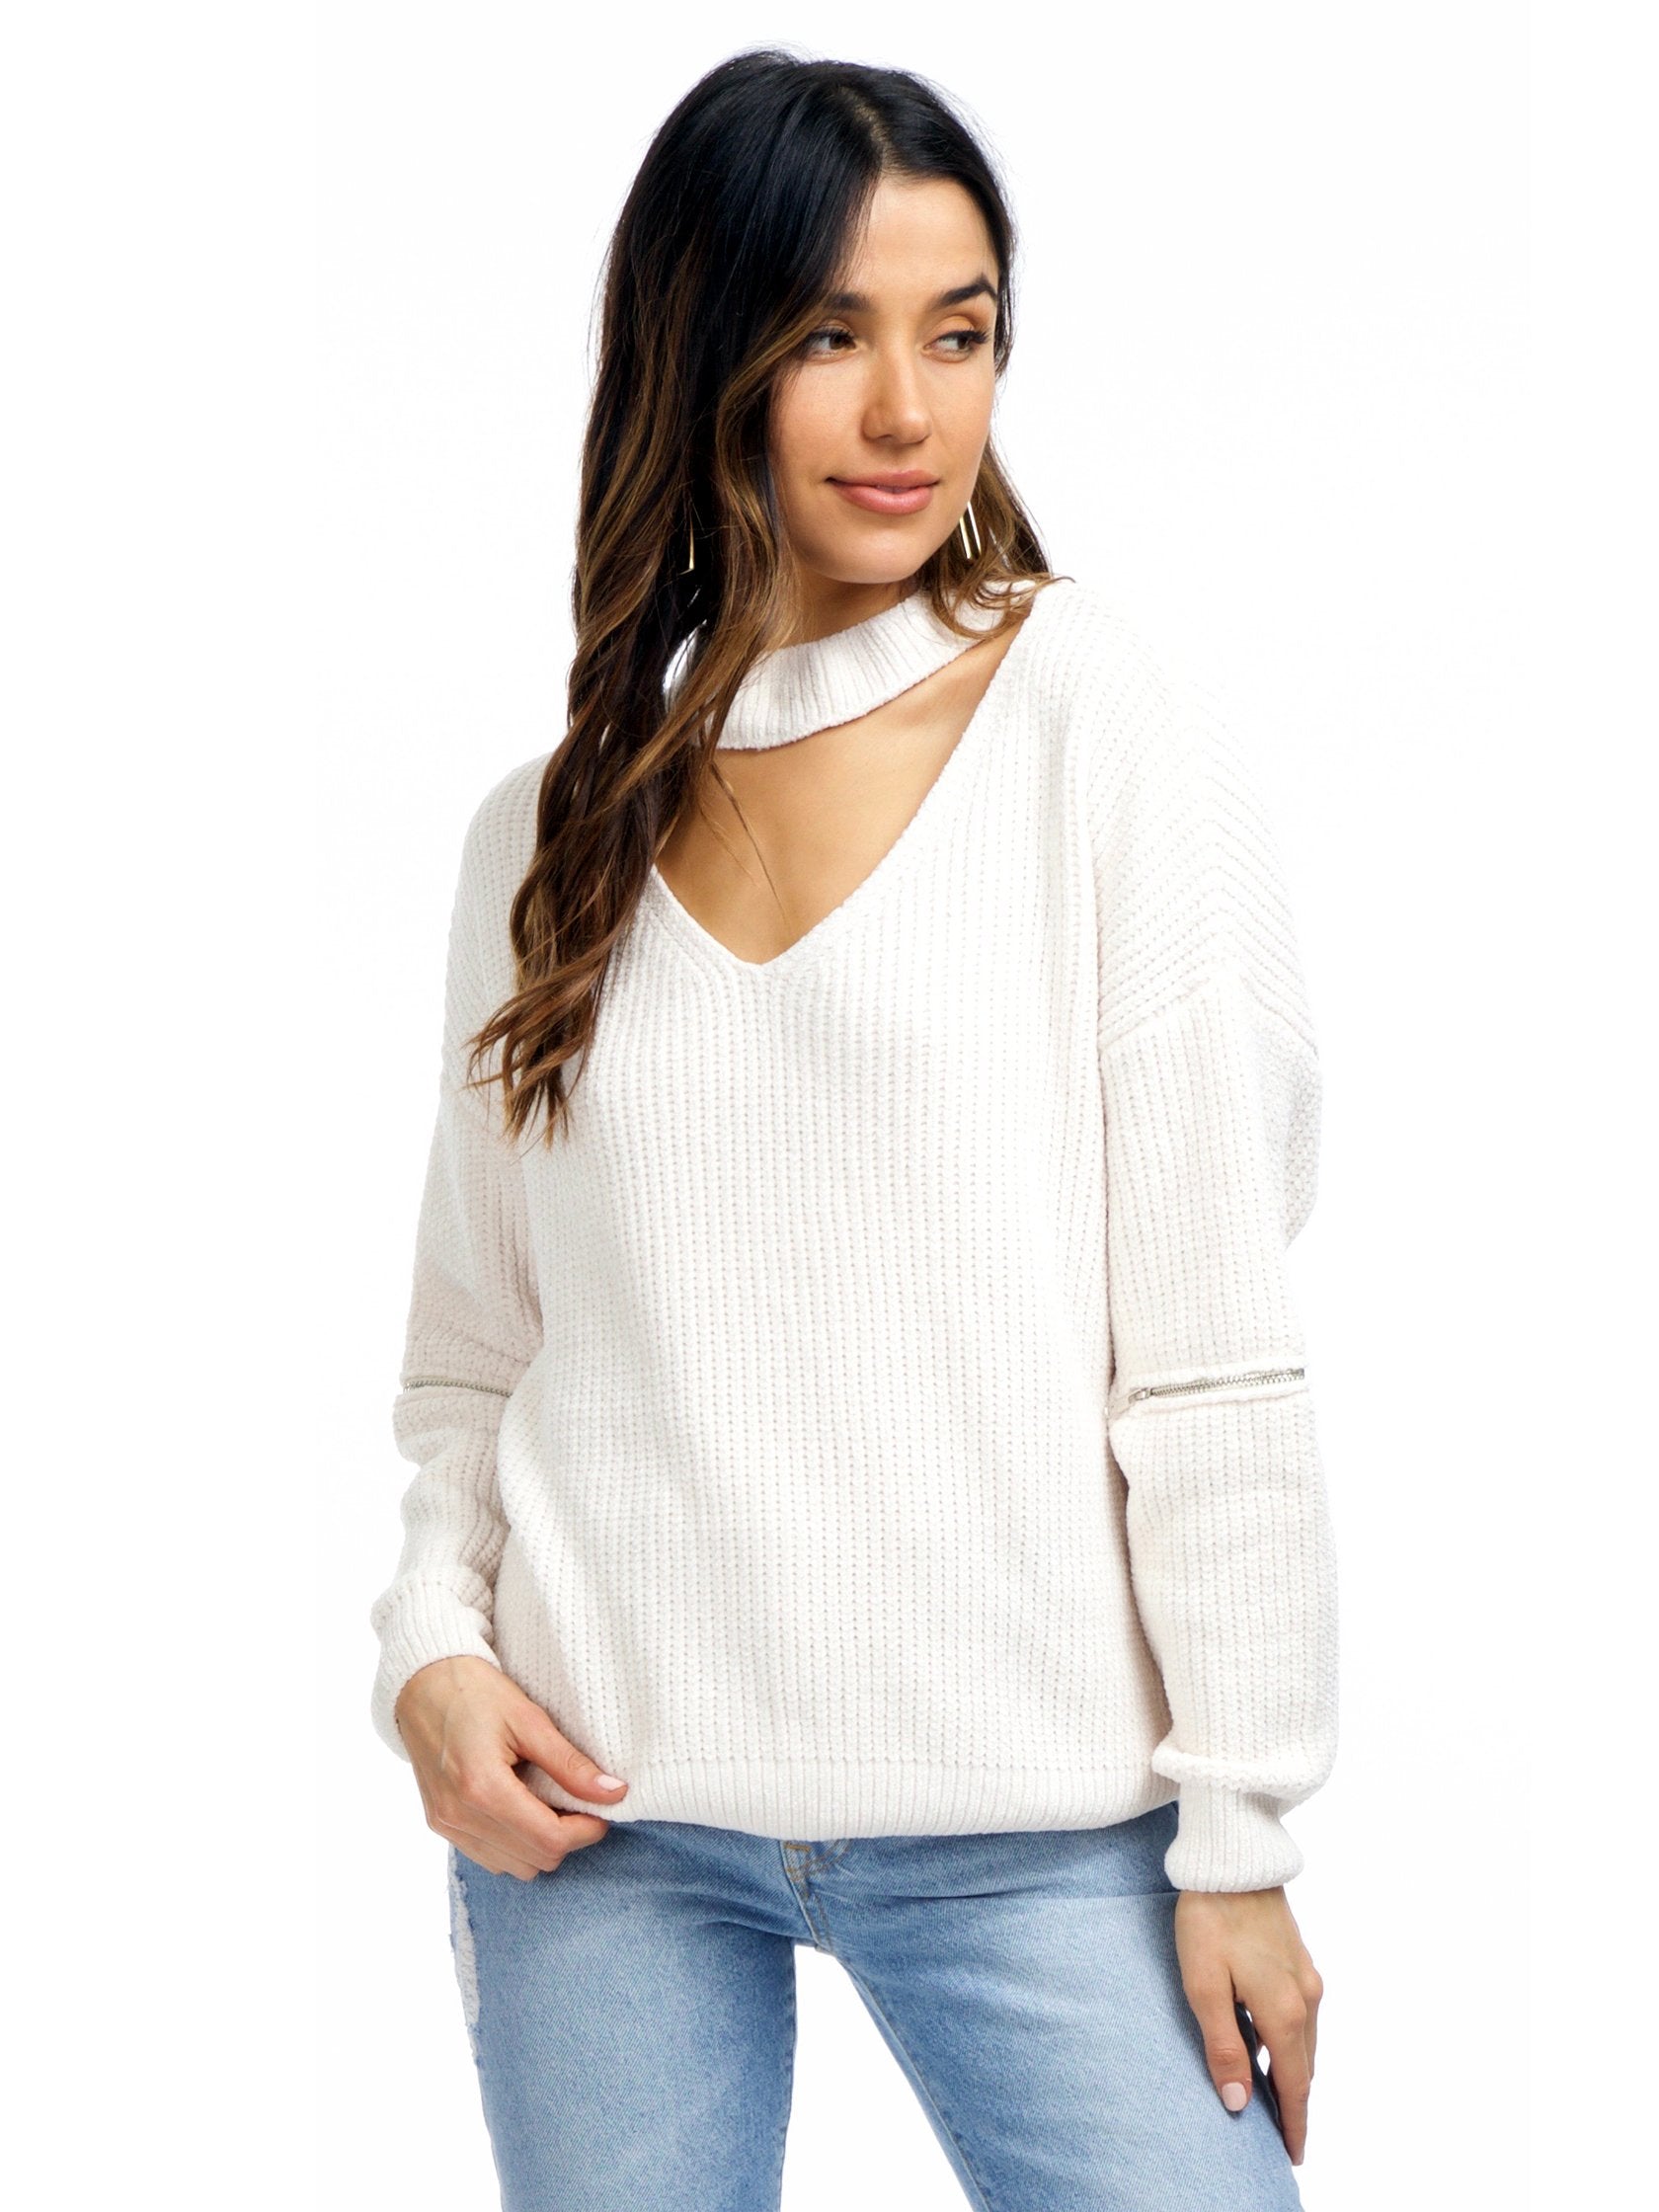 Woman wearing a sweater rental from Strut & Bolt called Megan Choker Sweater